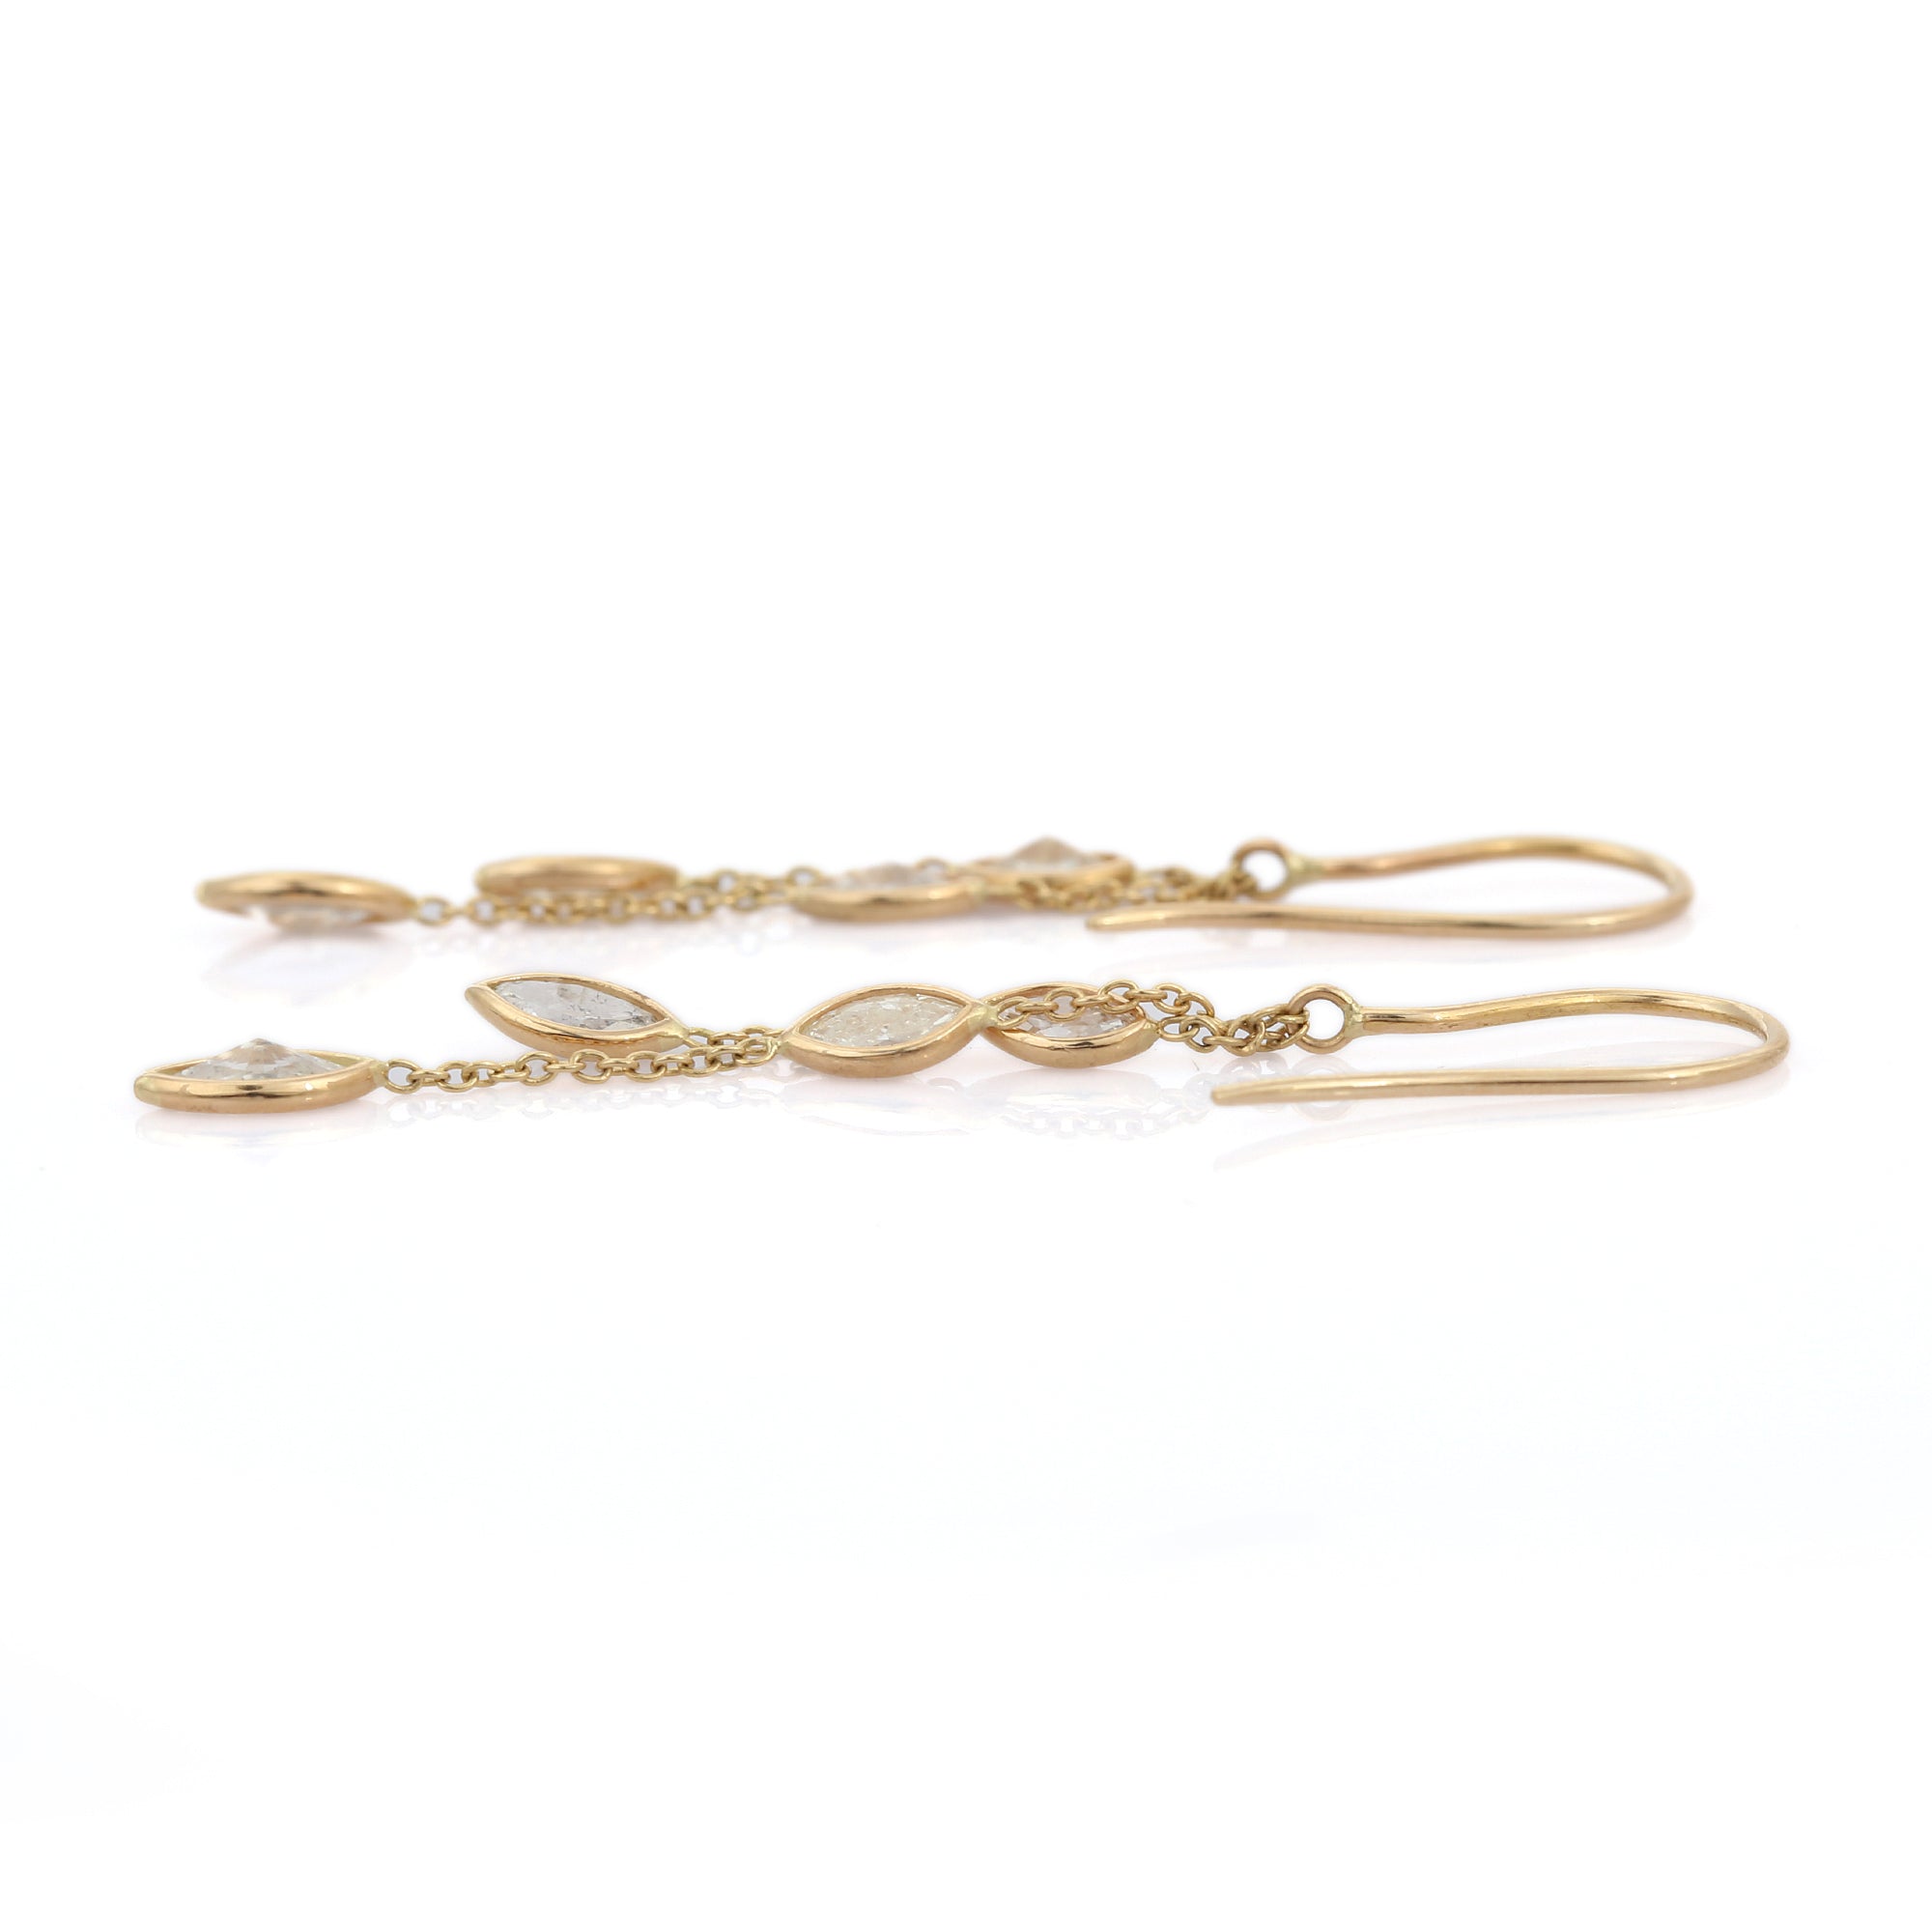 18K Yellow Gold Diamond Earrings - VR Jewels